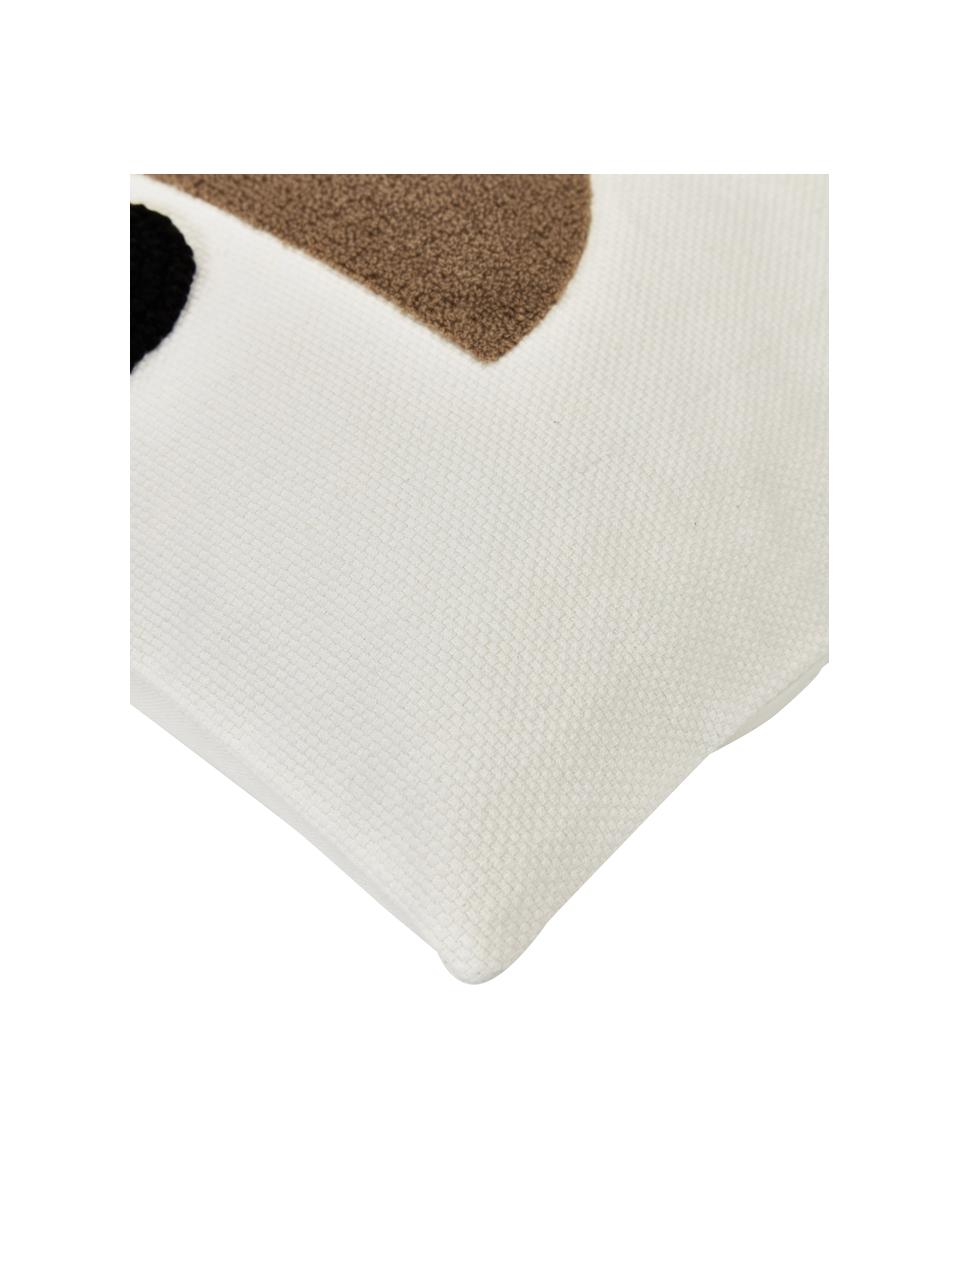 Funda de cojín bordada de algodón texturizada Izad, Exterior: 100% algodón Adorno, Marrón, negro, blanco crema, An 45 x L 45 cm